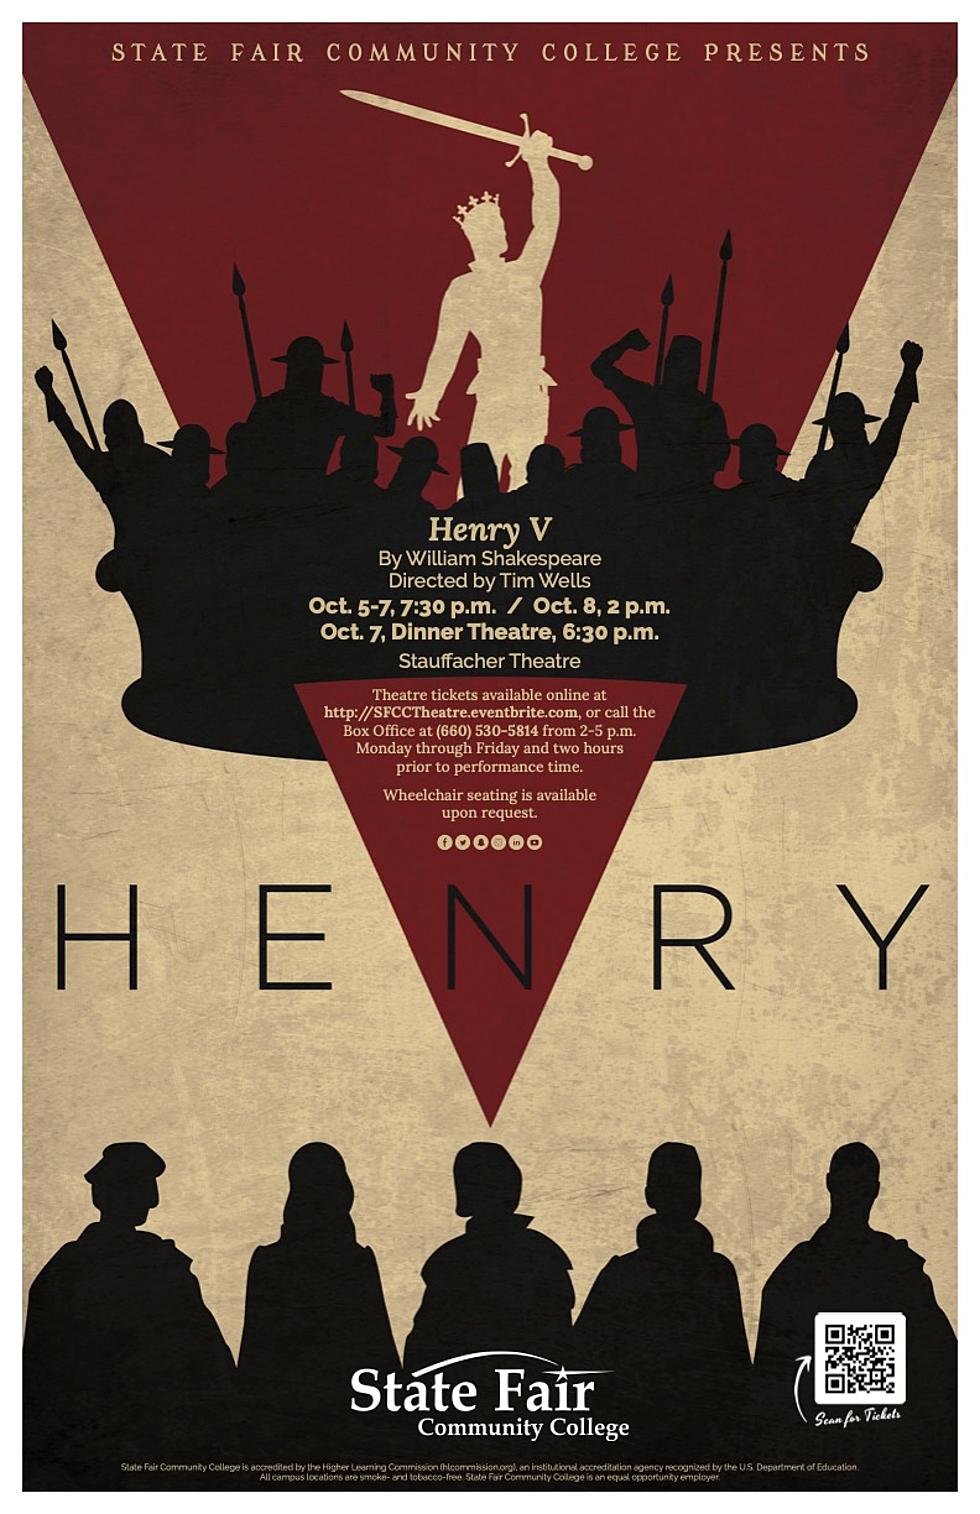 SFCC Theatre Arts to Present ‘Henry V’